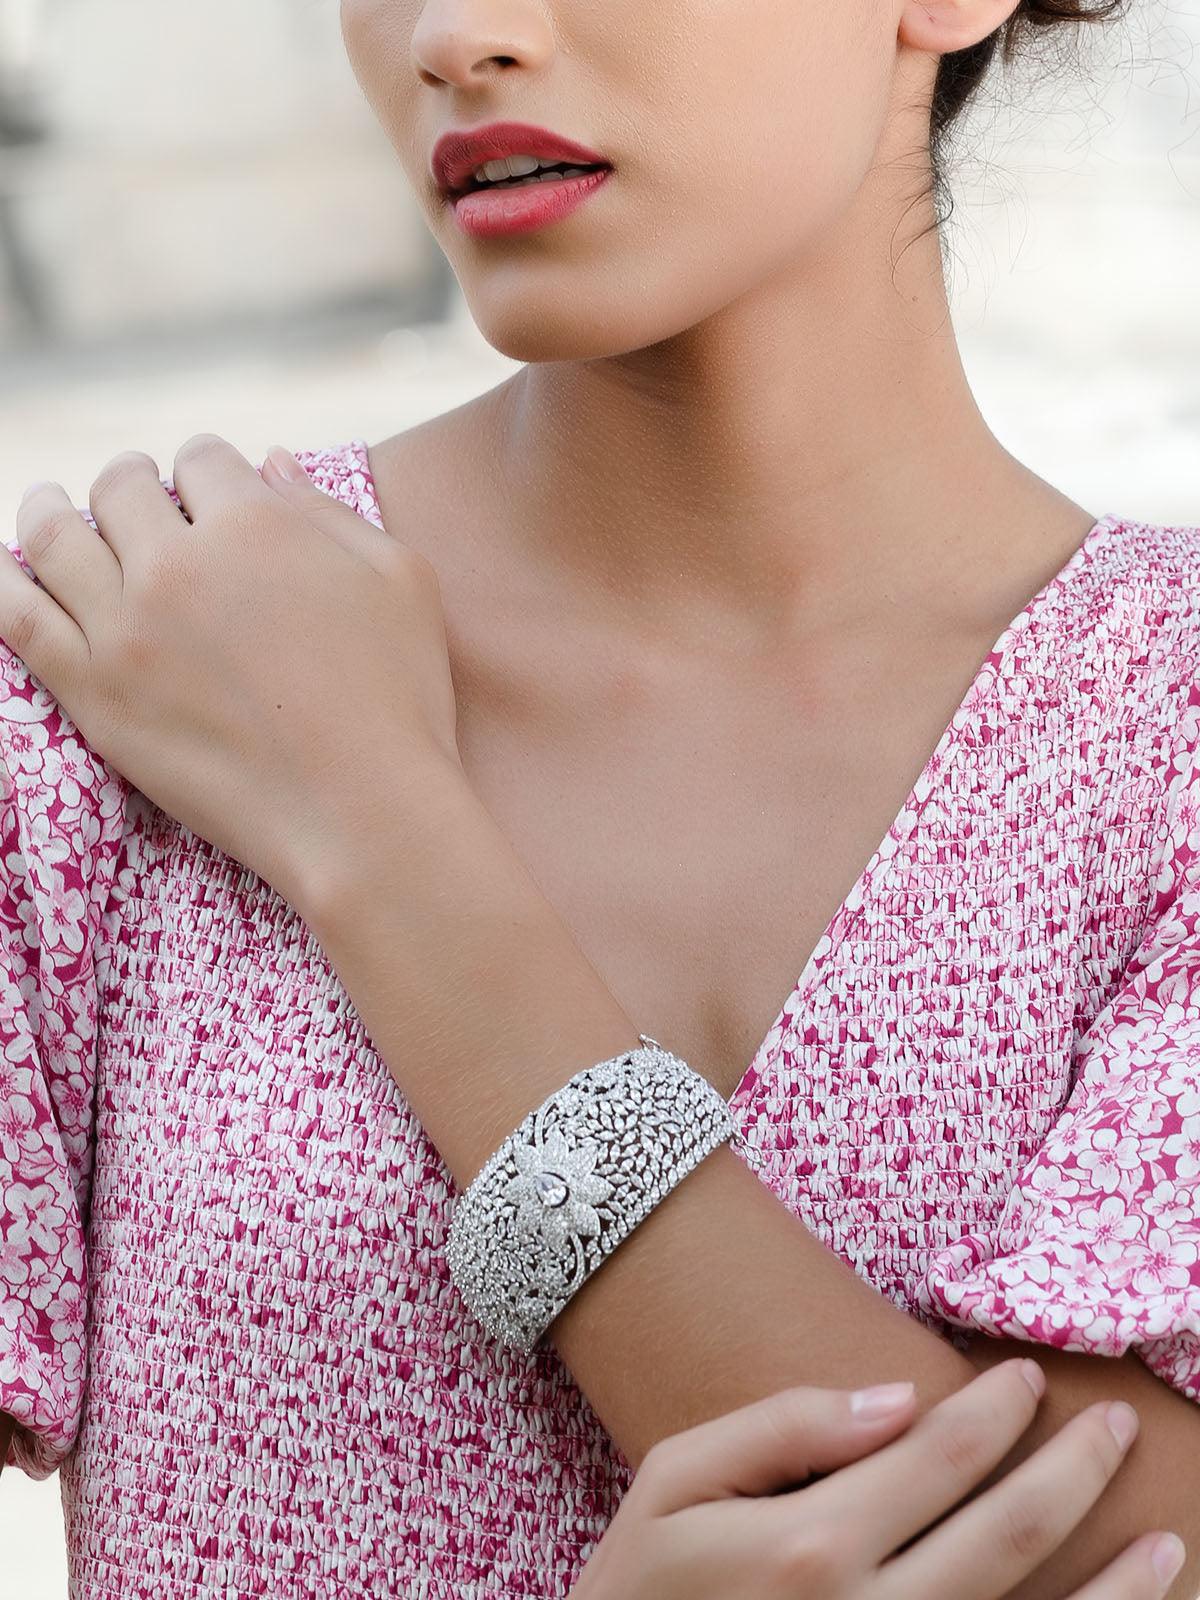 Women's Gorgeous Stunning Silver Studded Bracelet - ODETTE